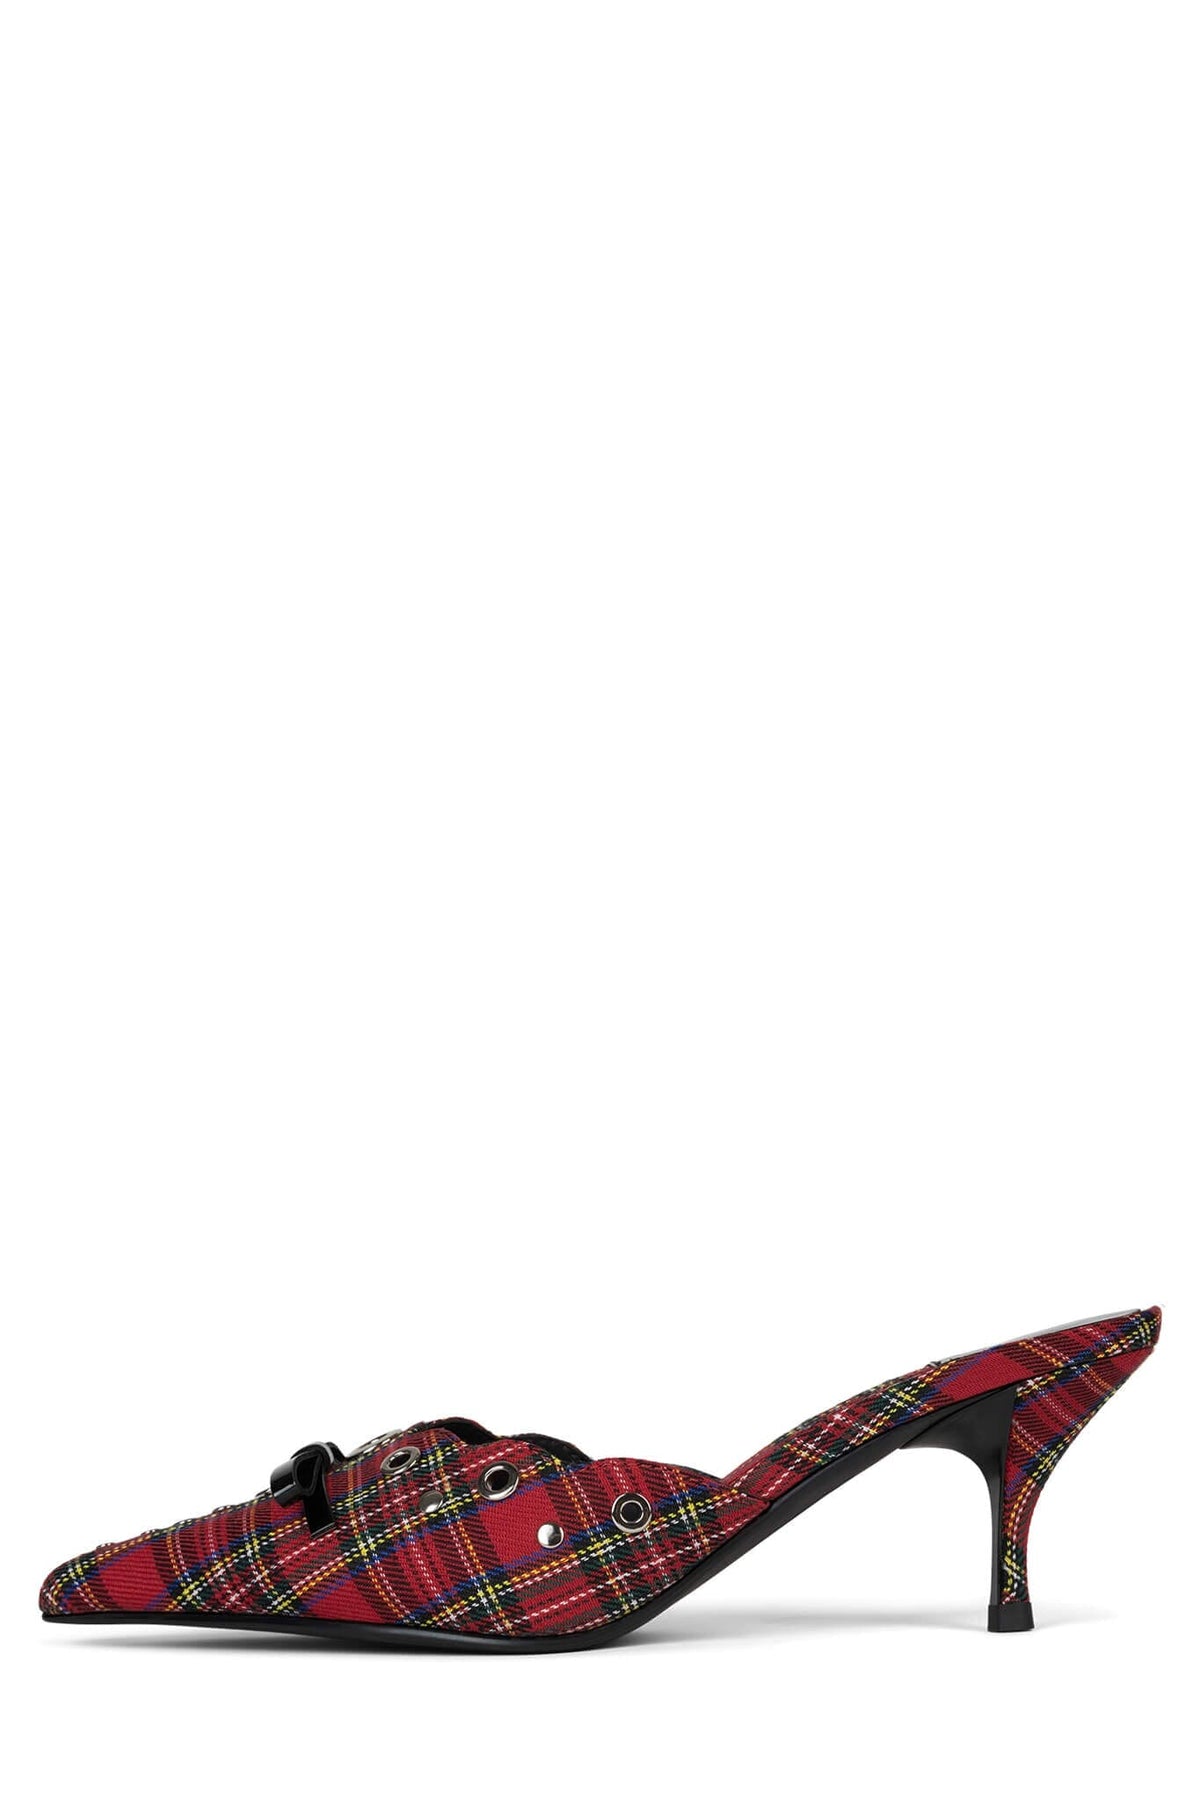 GRATIS Jeffrey Campbell Kitten Heel Mule Red Tarten Black Patent